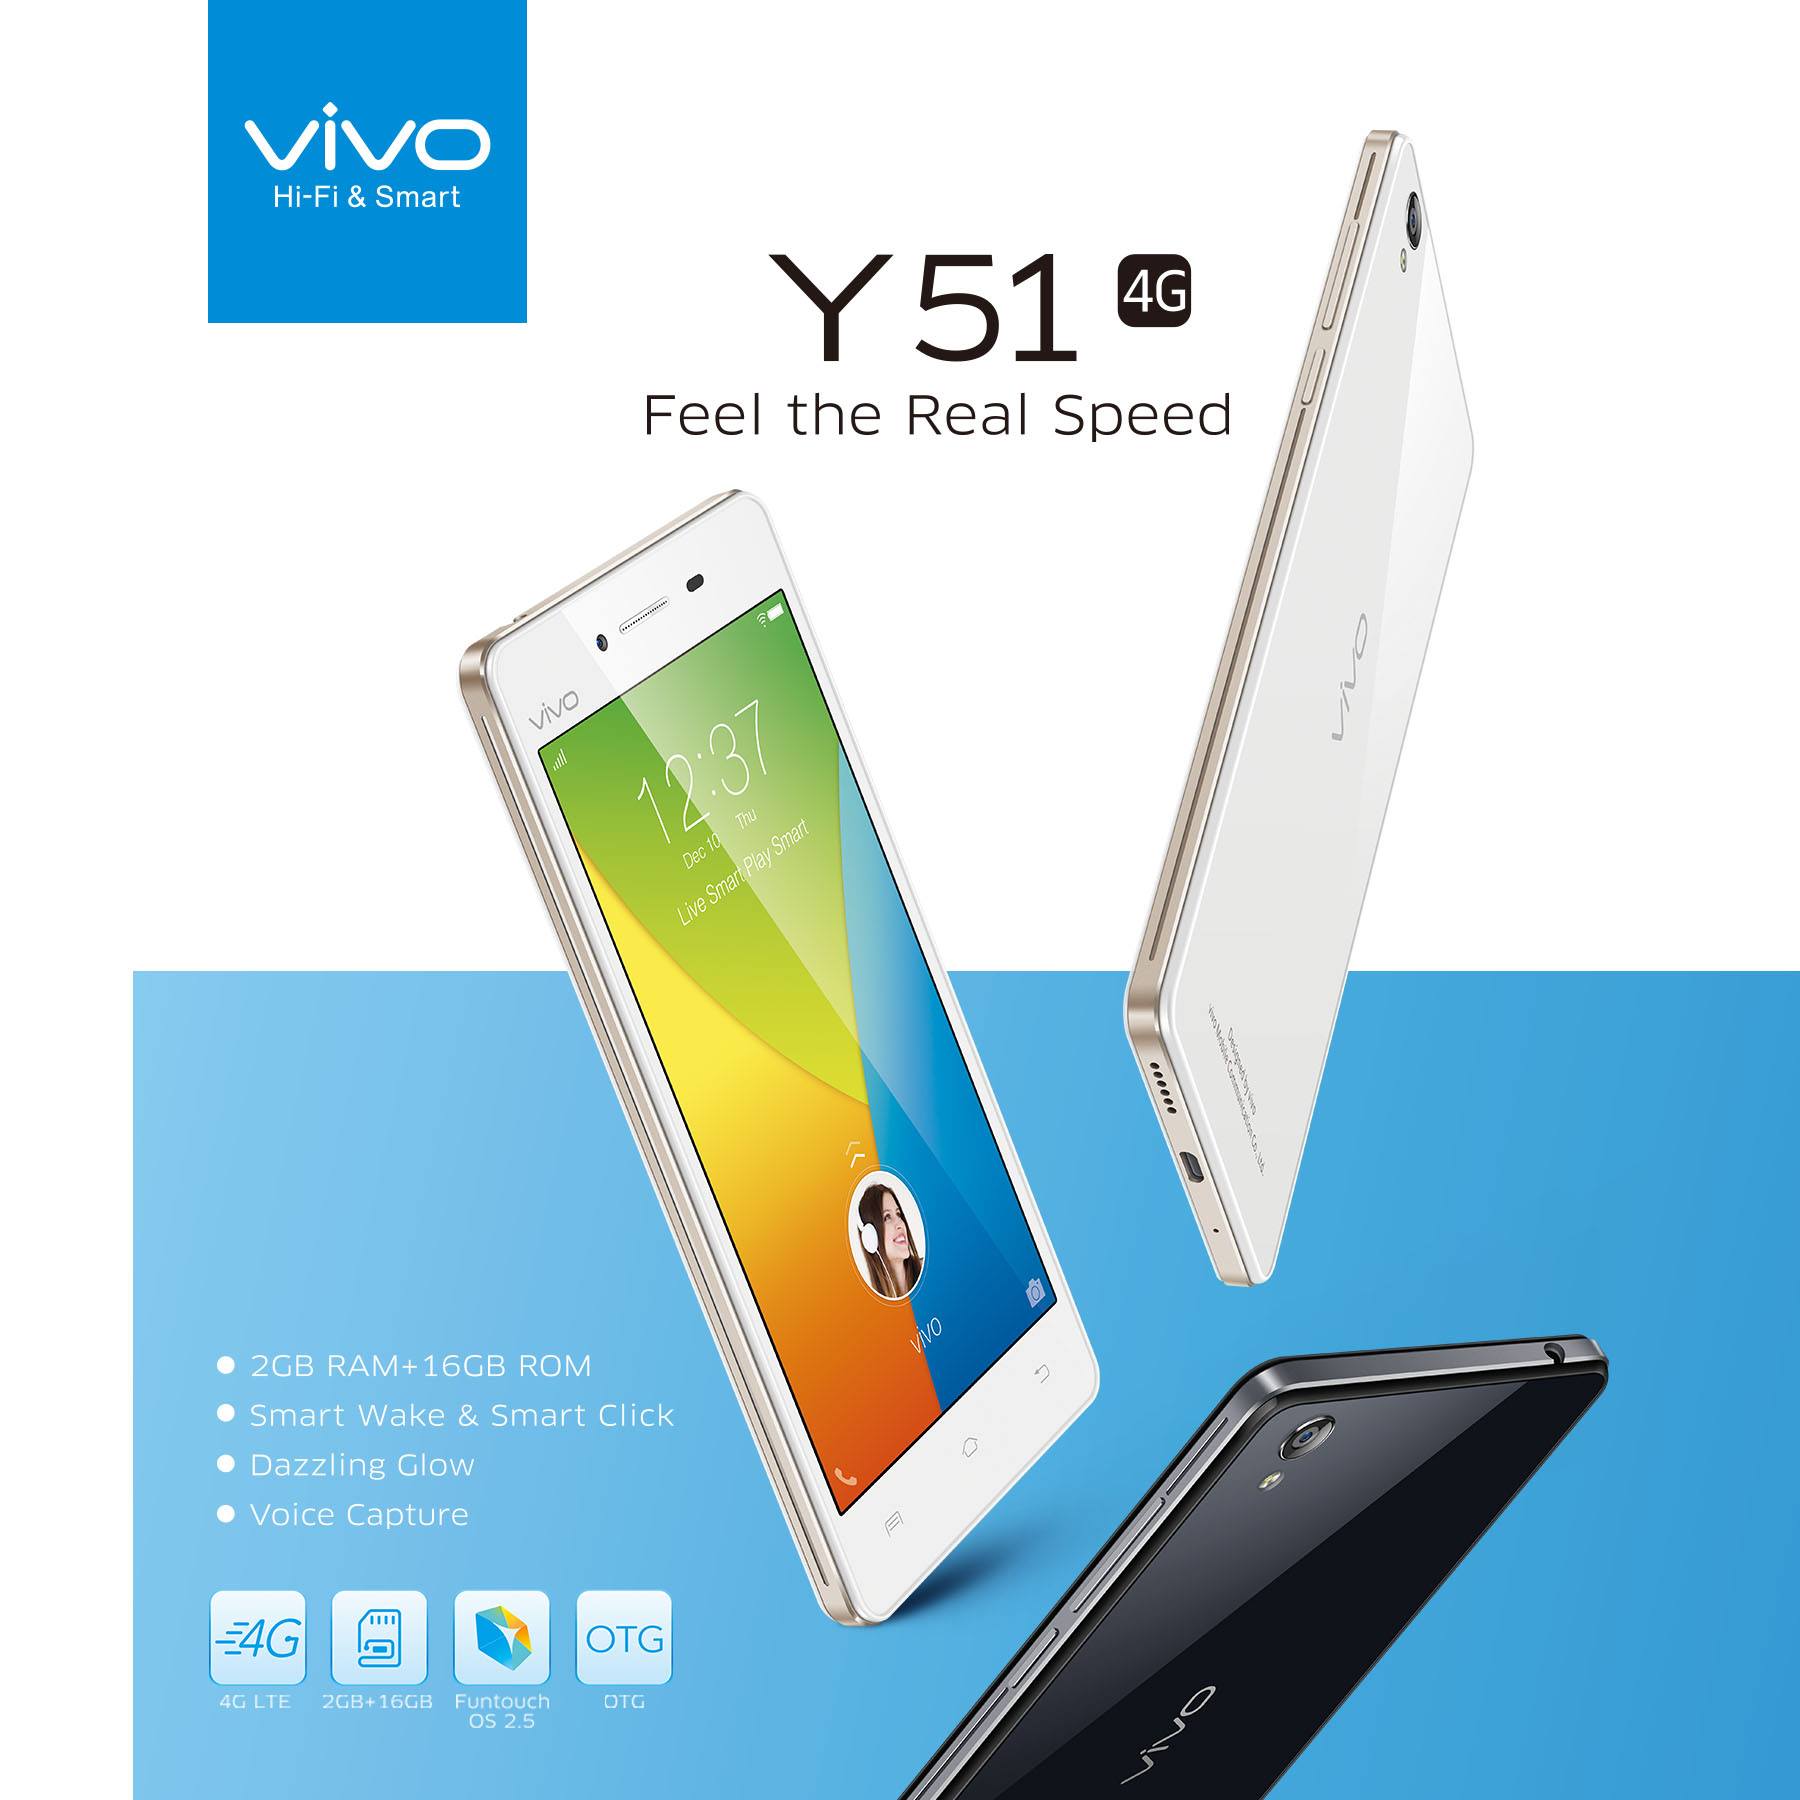 Vivo Phone Price Philippines / Vivo V1 Price in the Philippines and